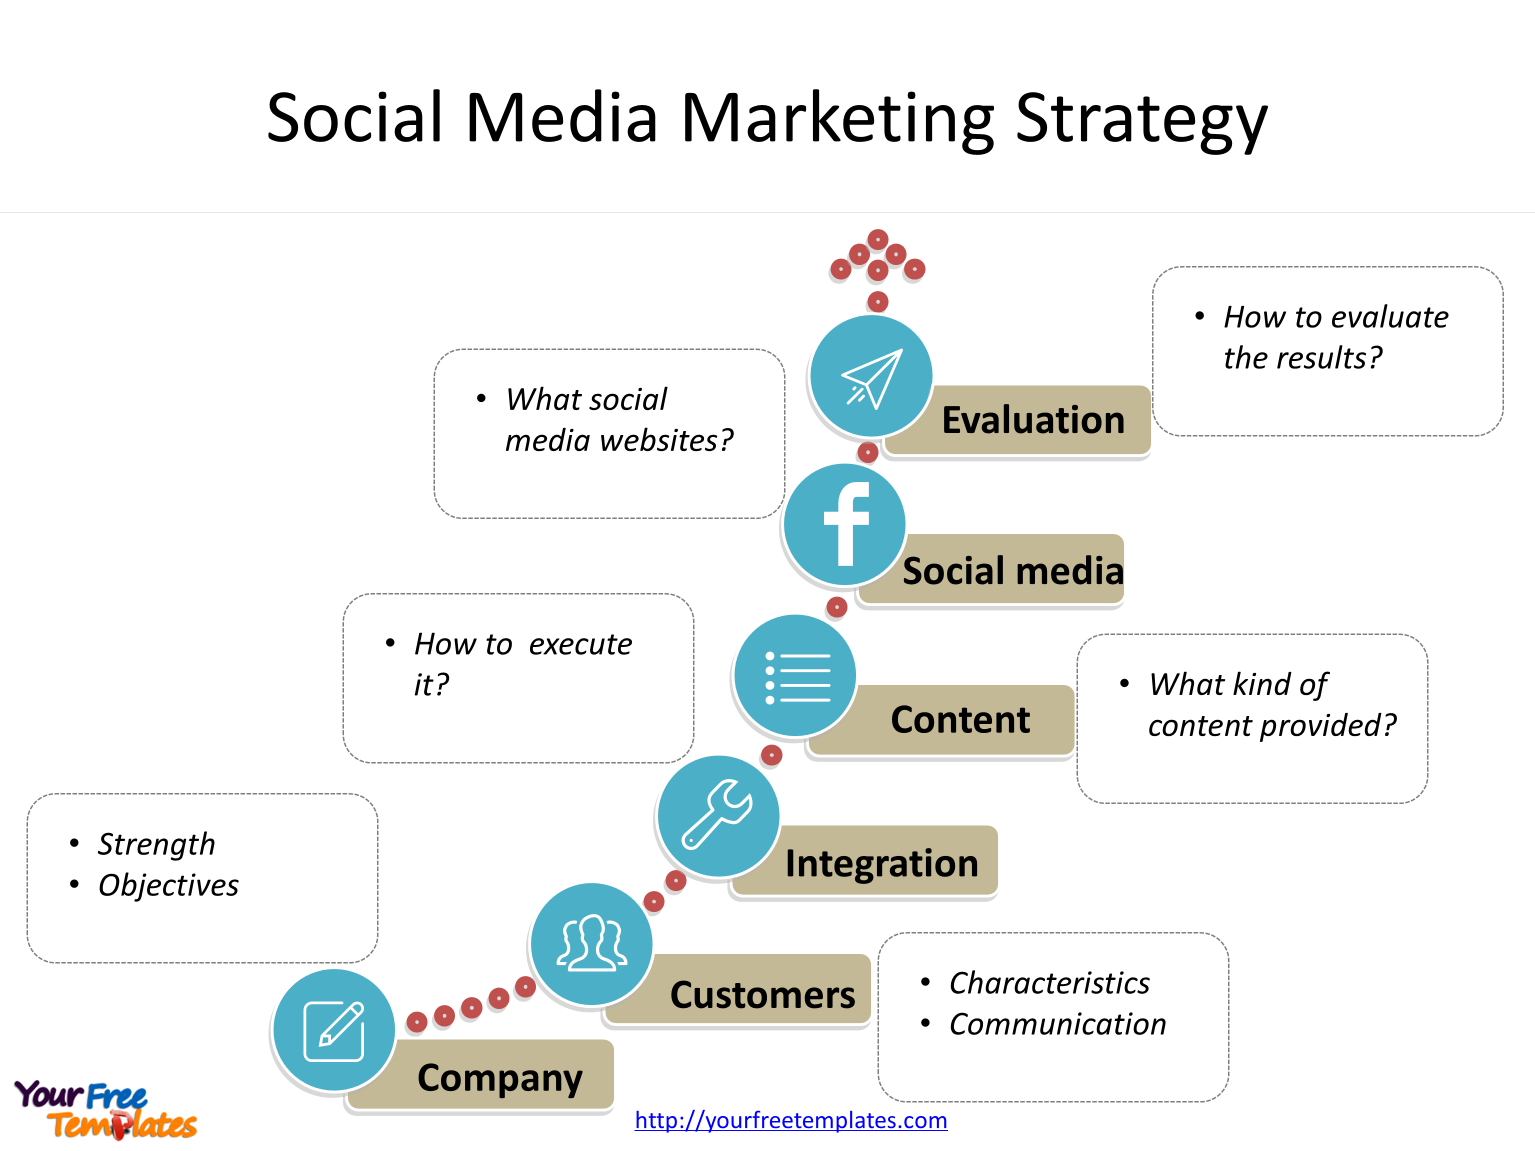 Social media marketing strategy template